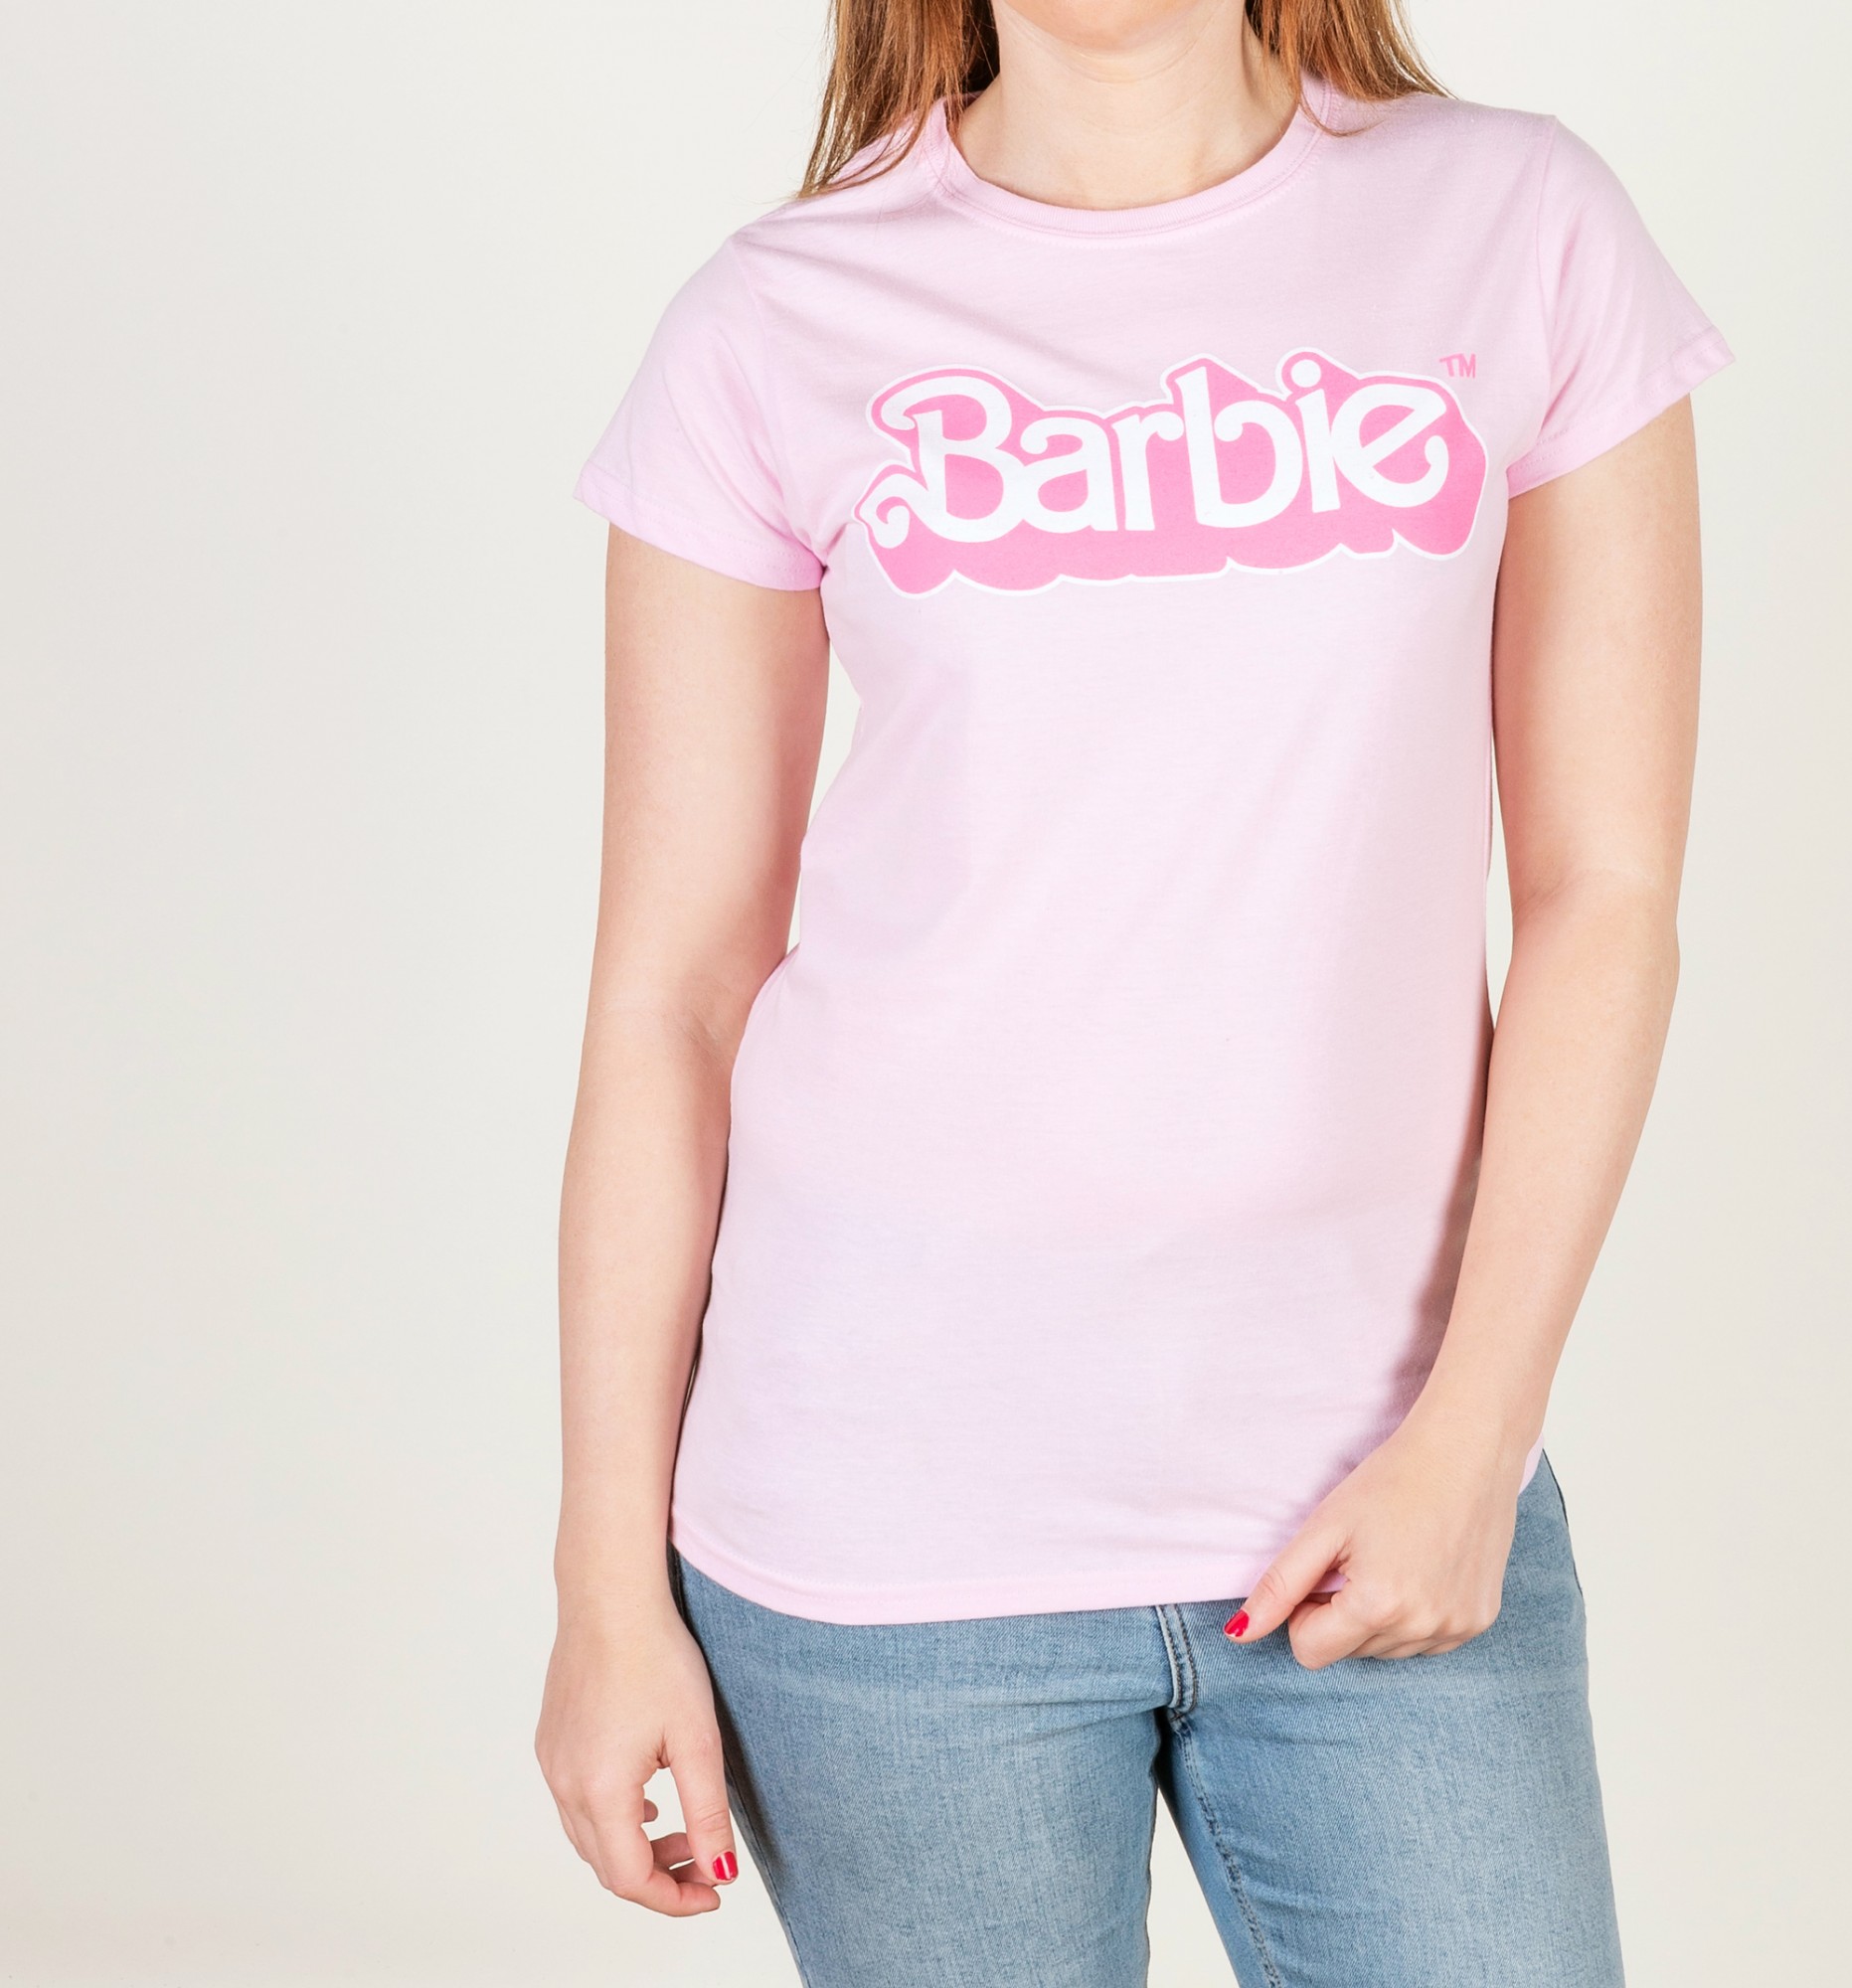 barbie shirt womens